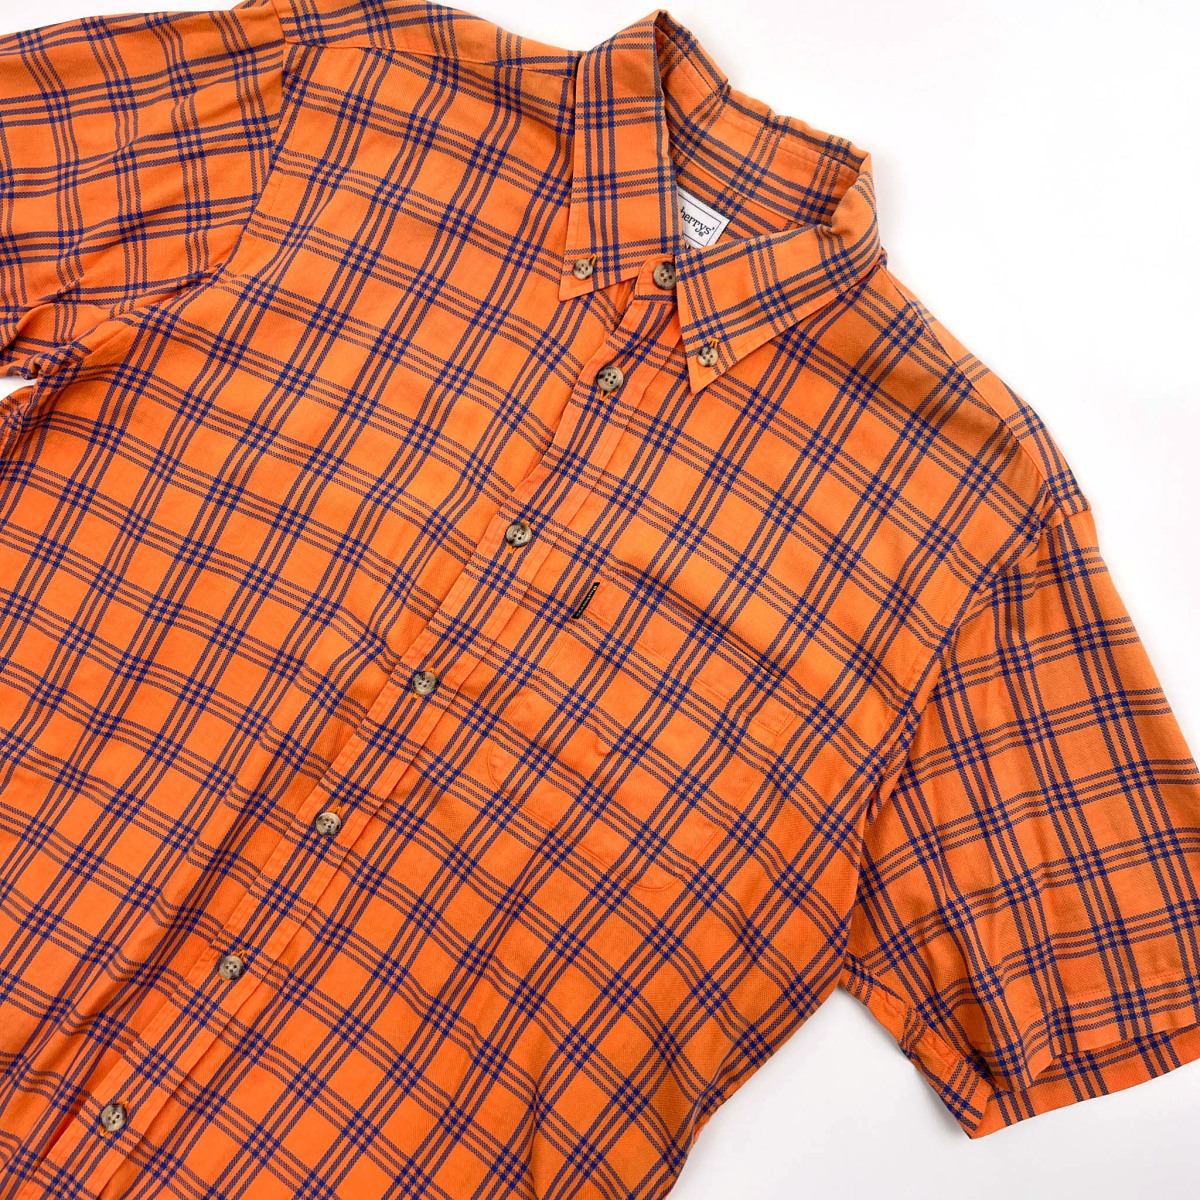 90s VINTAGE Burberry Burberry check pattern BD short sleeves shirt size L orange burberrys